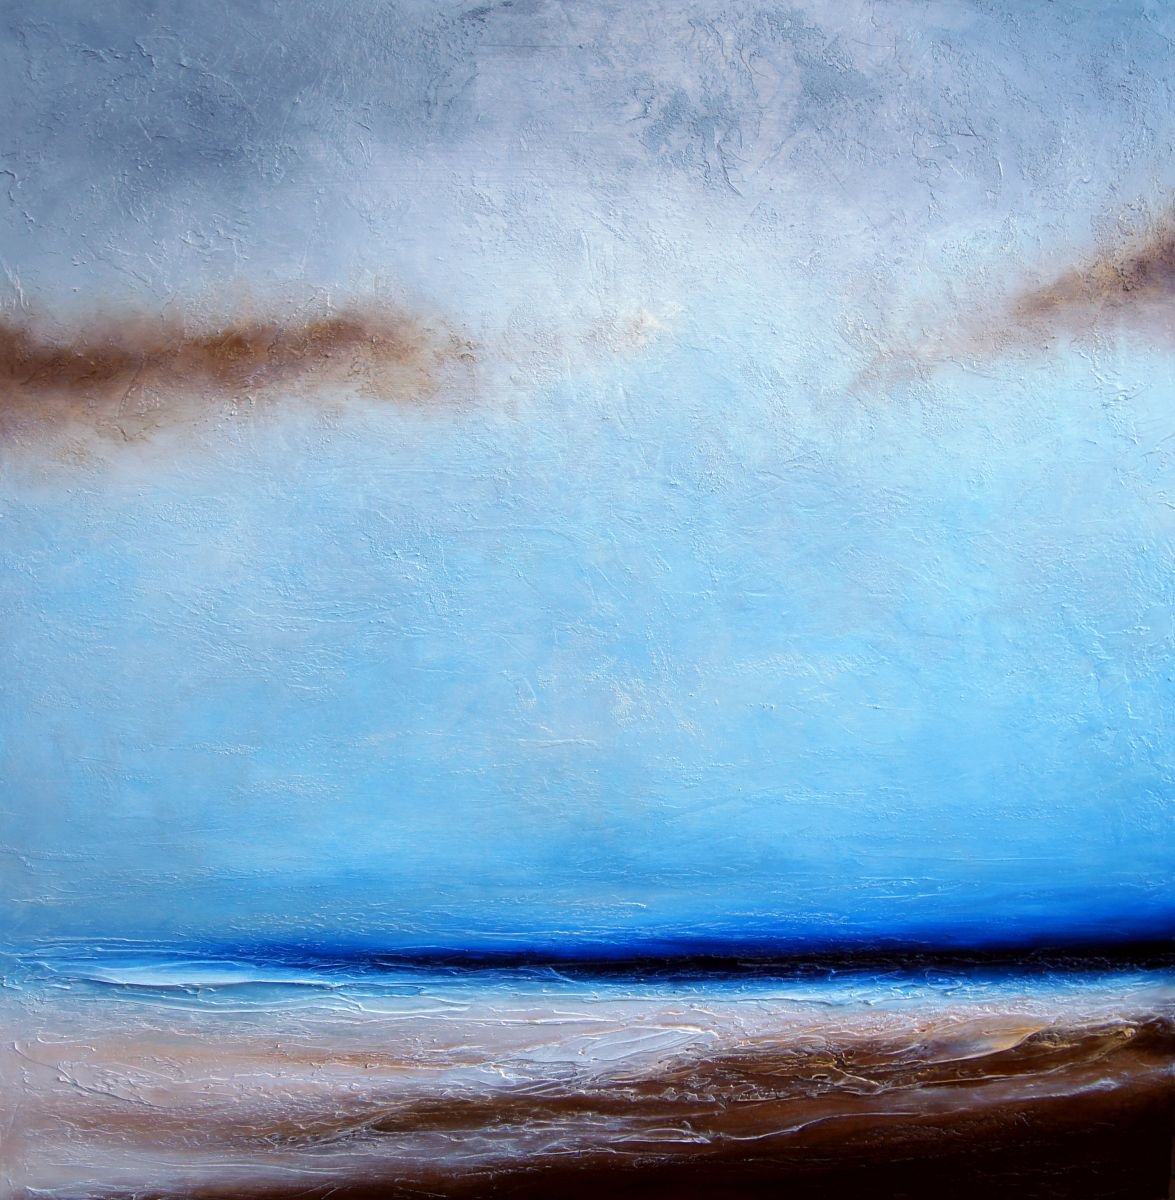 Sands by the Sea by Pawel Pyrka